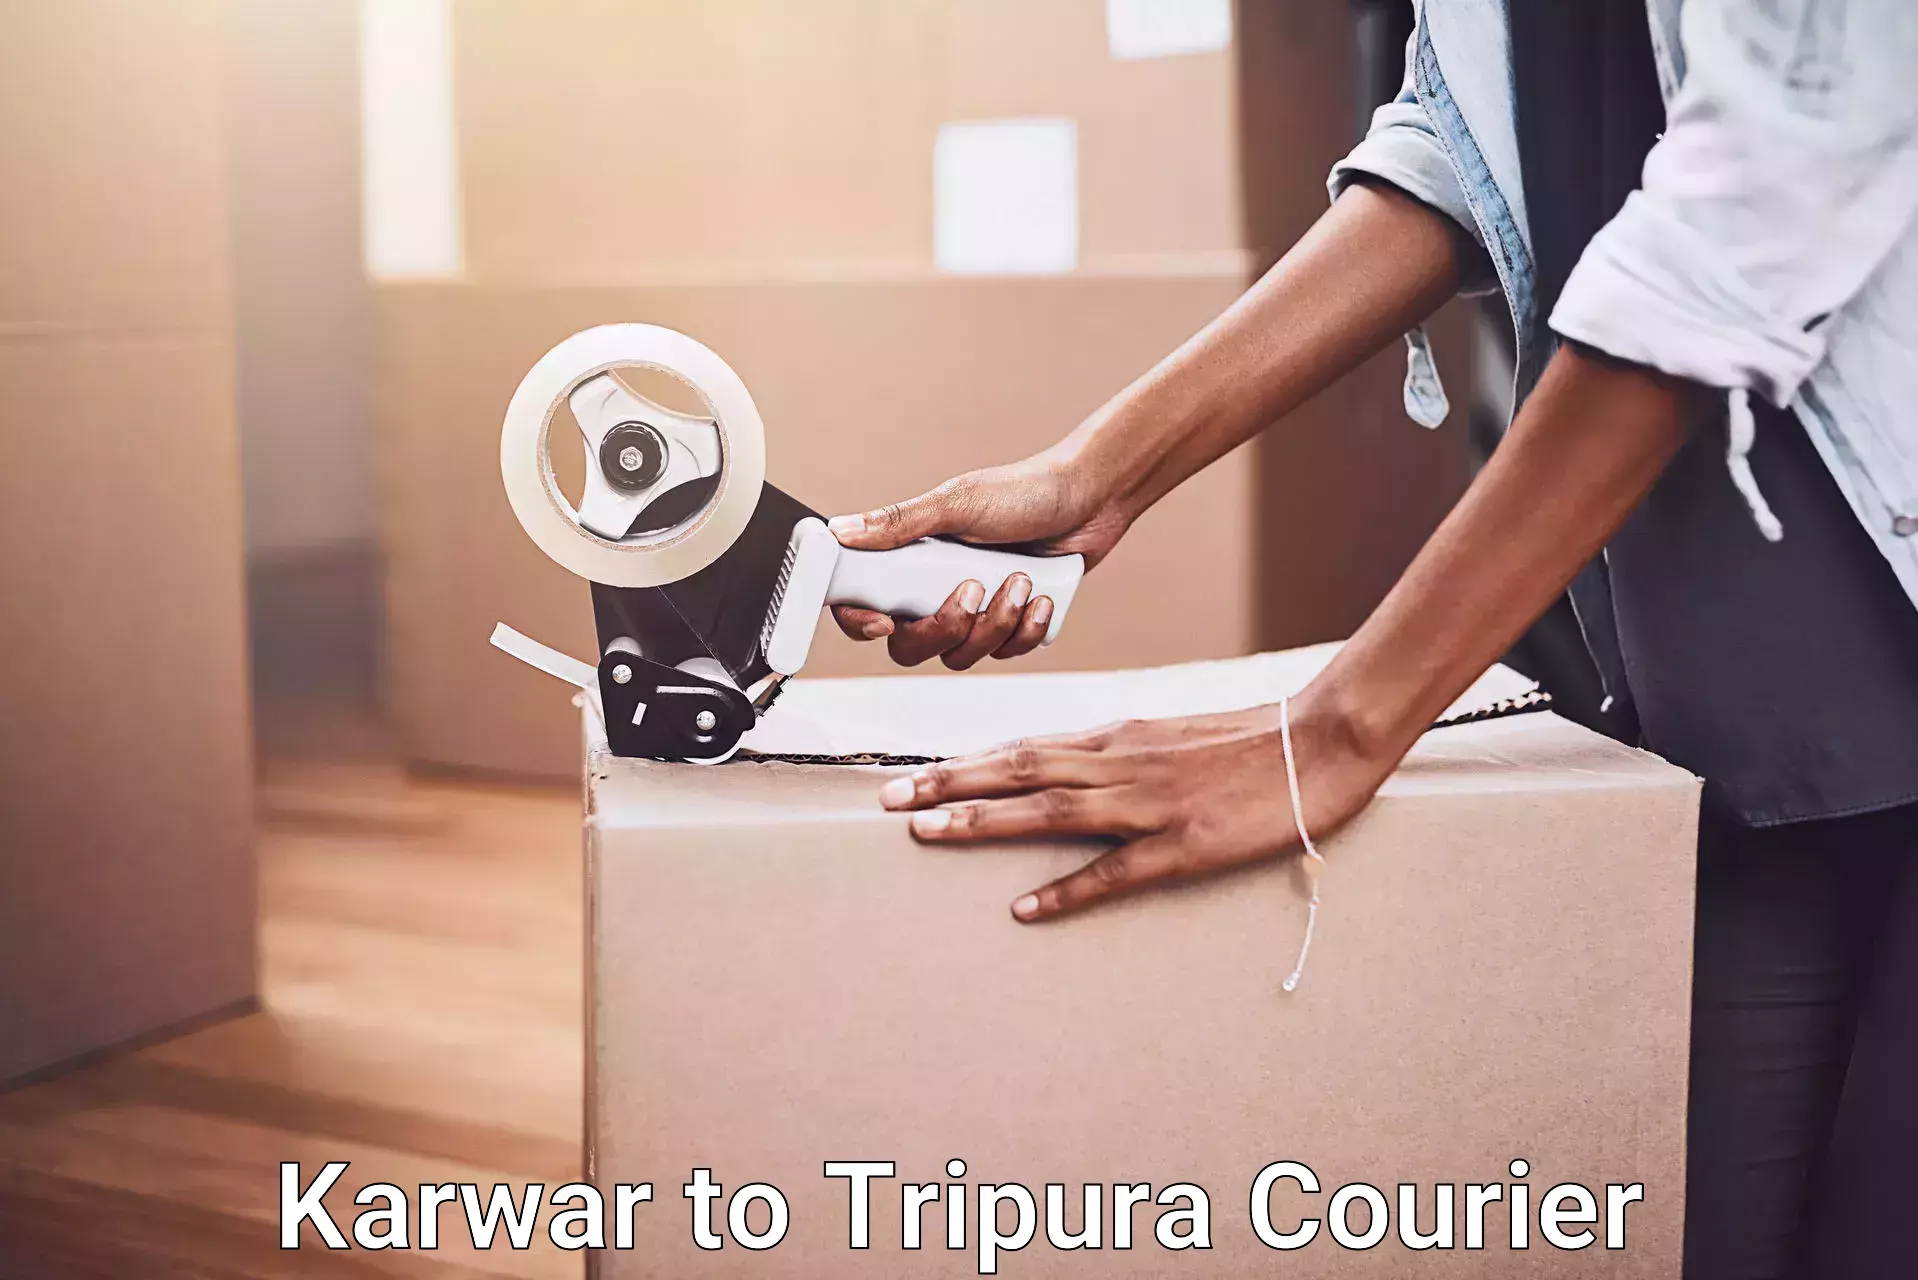 Efficient moving company Karwar to Udaipur Tripura